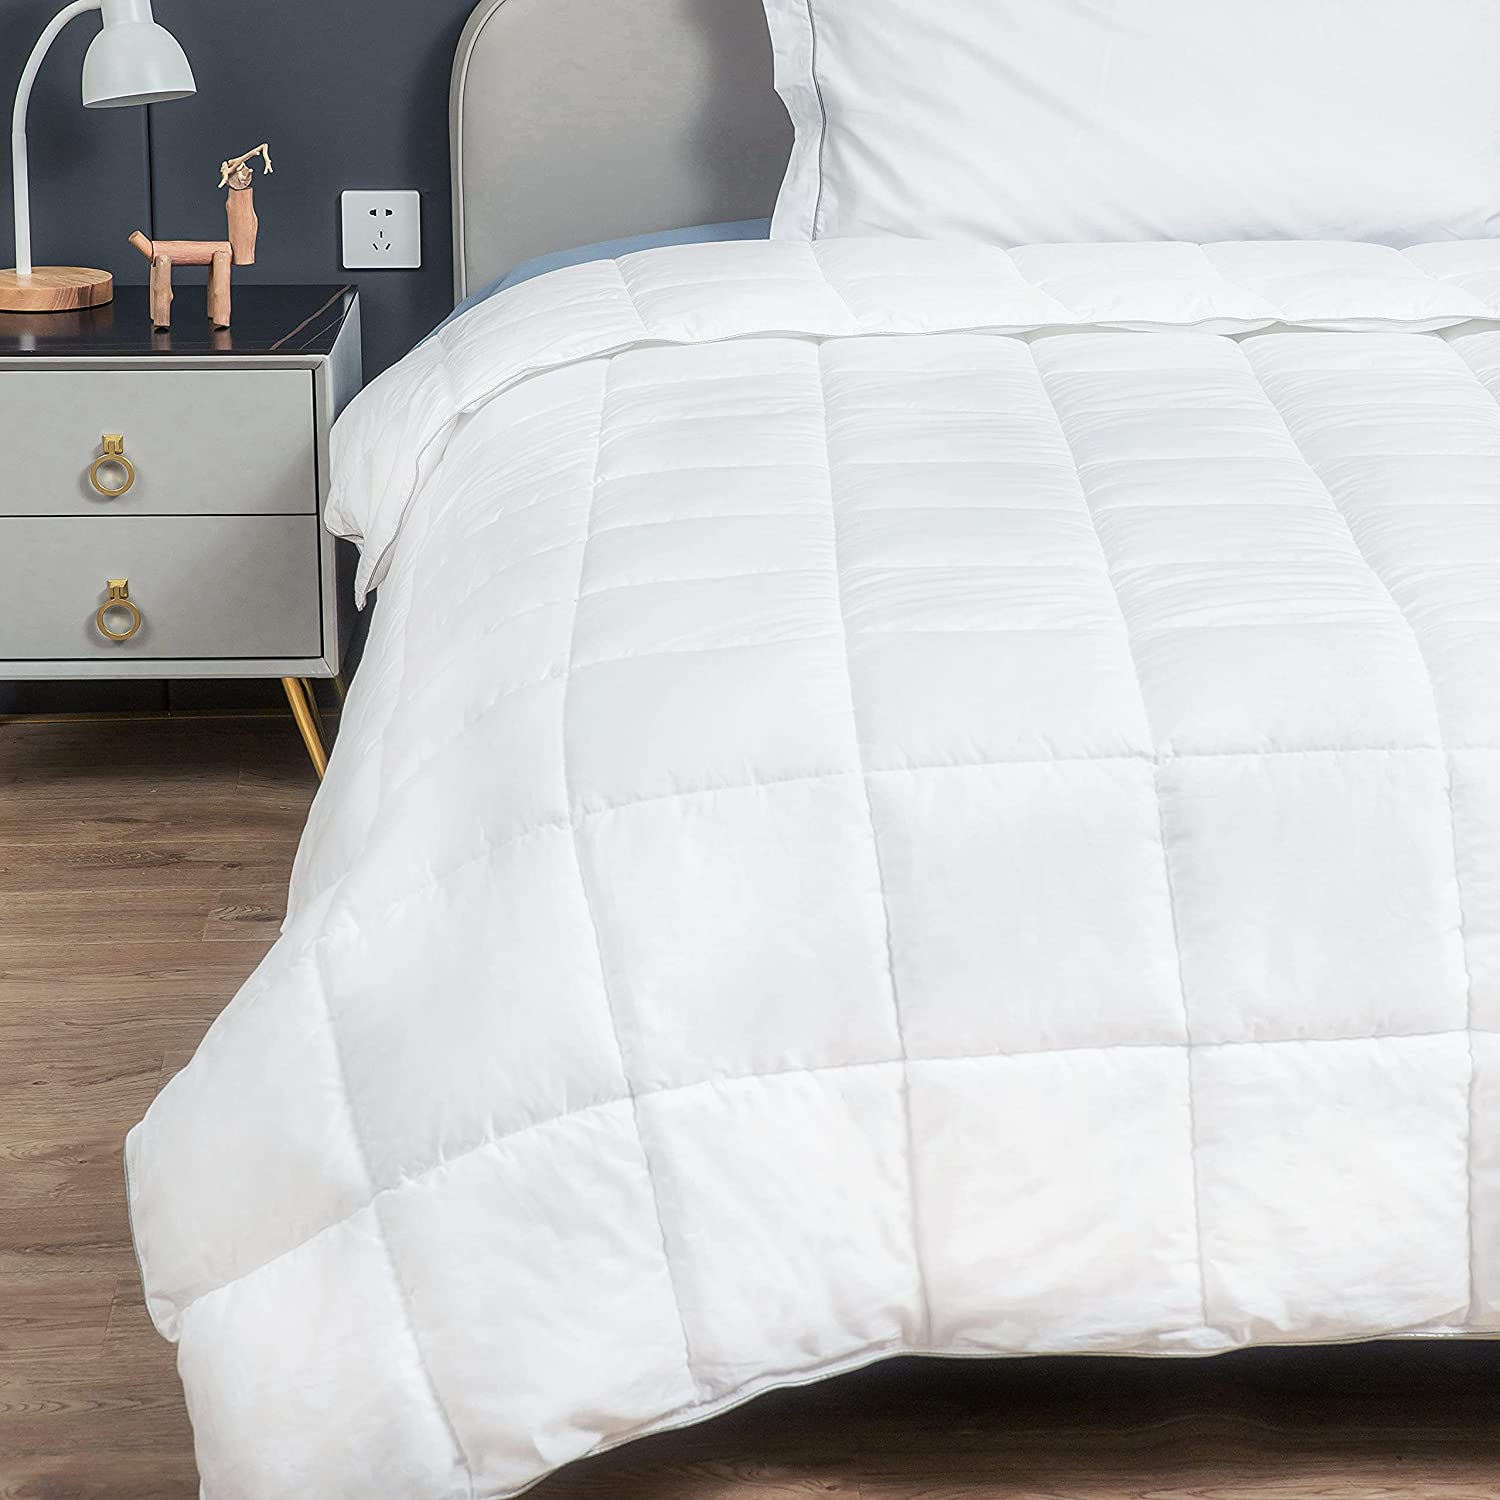 Price:$76.99  100% Cotton Queen Duvet Insert, White Down Alternative Cotton Comforter, All Season Lightweight 8 Corner Ties & Soft & Breathable & Noiseless : Home & Kitchen